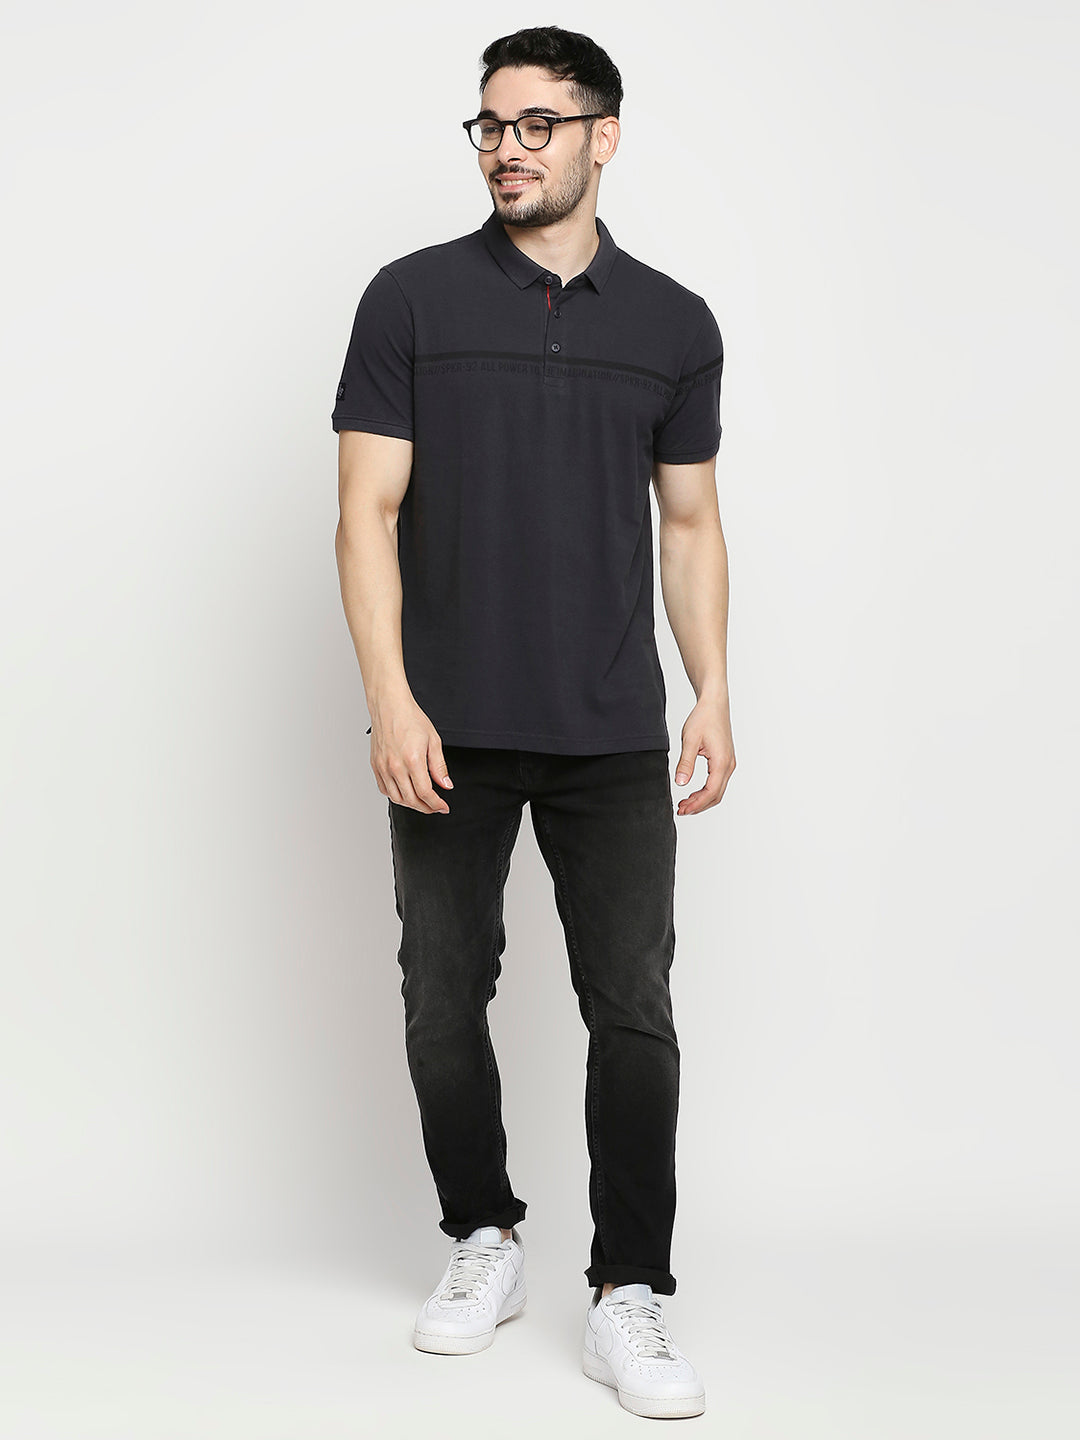 Spykar Slate Grey Cotton Half Sleeve Printed Polo T-Shirts for Men